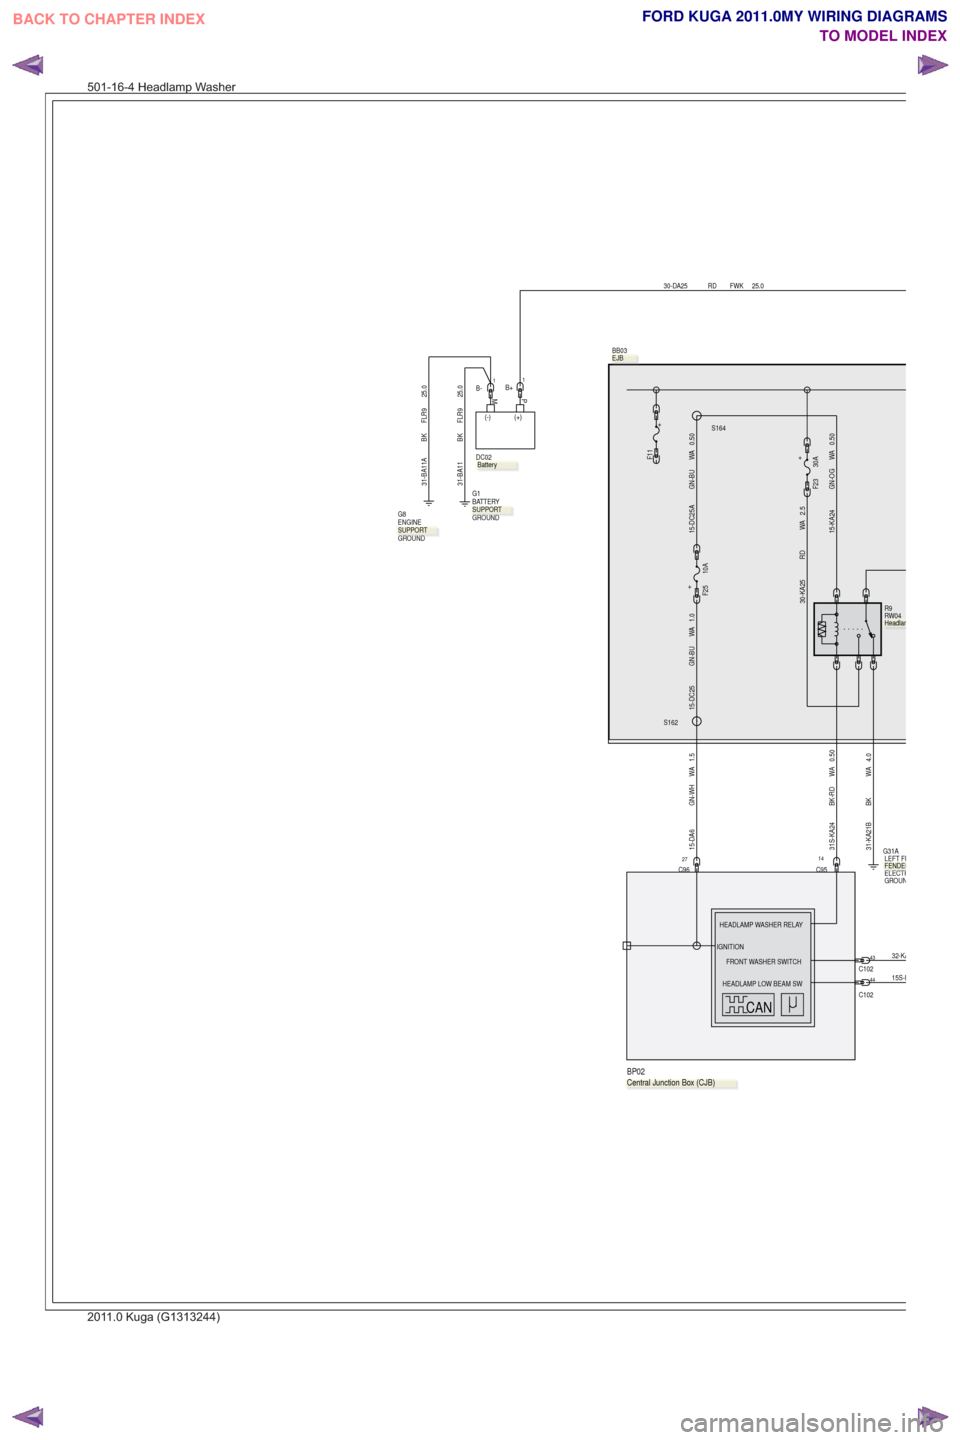 FORD KUGA 2011 1.G Wiring Diagram Workshop Manual .
R9
RW04
0.50
WA
BK-RD
31S-KA24
BB03
30-DA25 RD FWK 25.0
14C95
+
F23 30A
C1024332-KA
15S-L
C102
44
2.5
WA
RD
30-KA25
PM
(+)
(-)
.
DC02
1B+
HEADLAMP WASHER RELAY
HEADLAMP LOW BEAM SW
FRONT WASHER SWIT